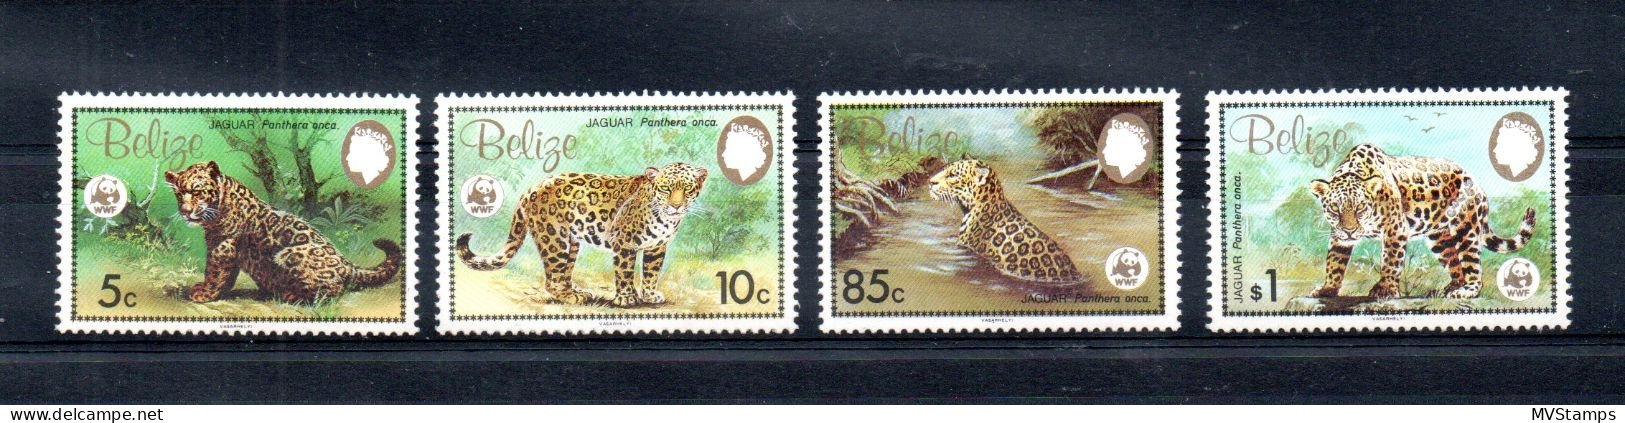 Belize 1983 Satz 719/22 WWF/Jaguar Schon Postfrisch - Belize (1973-...)